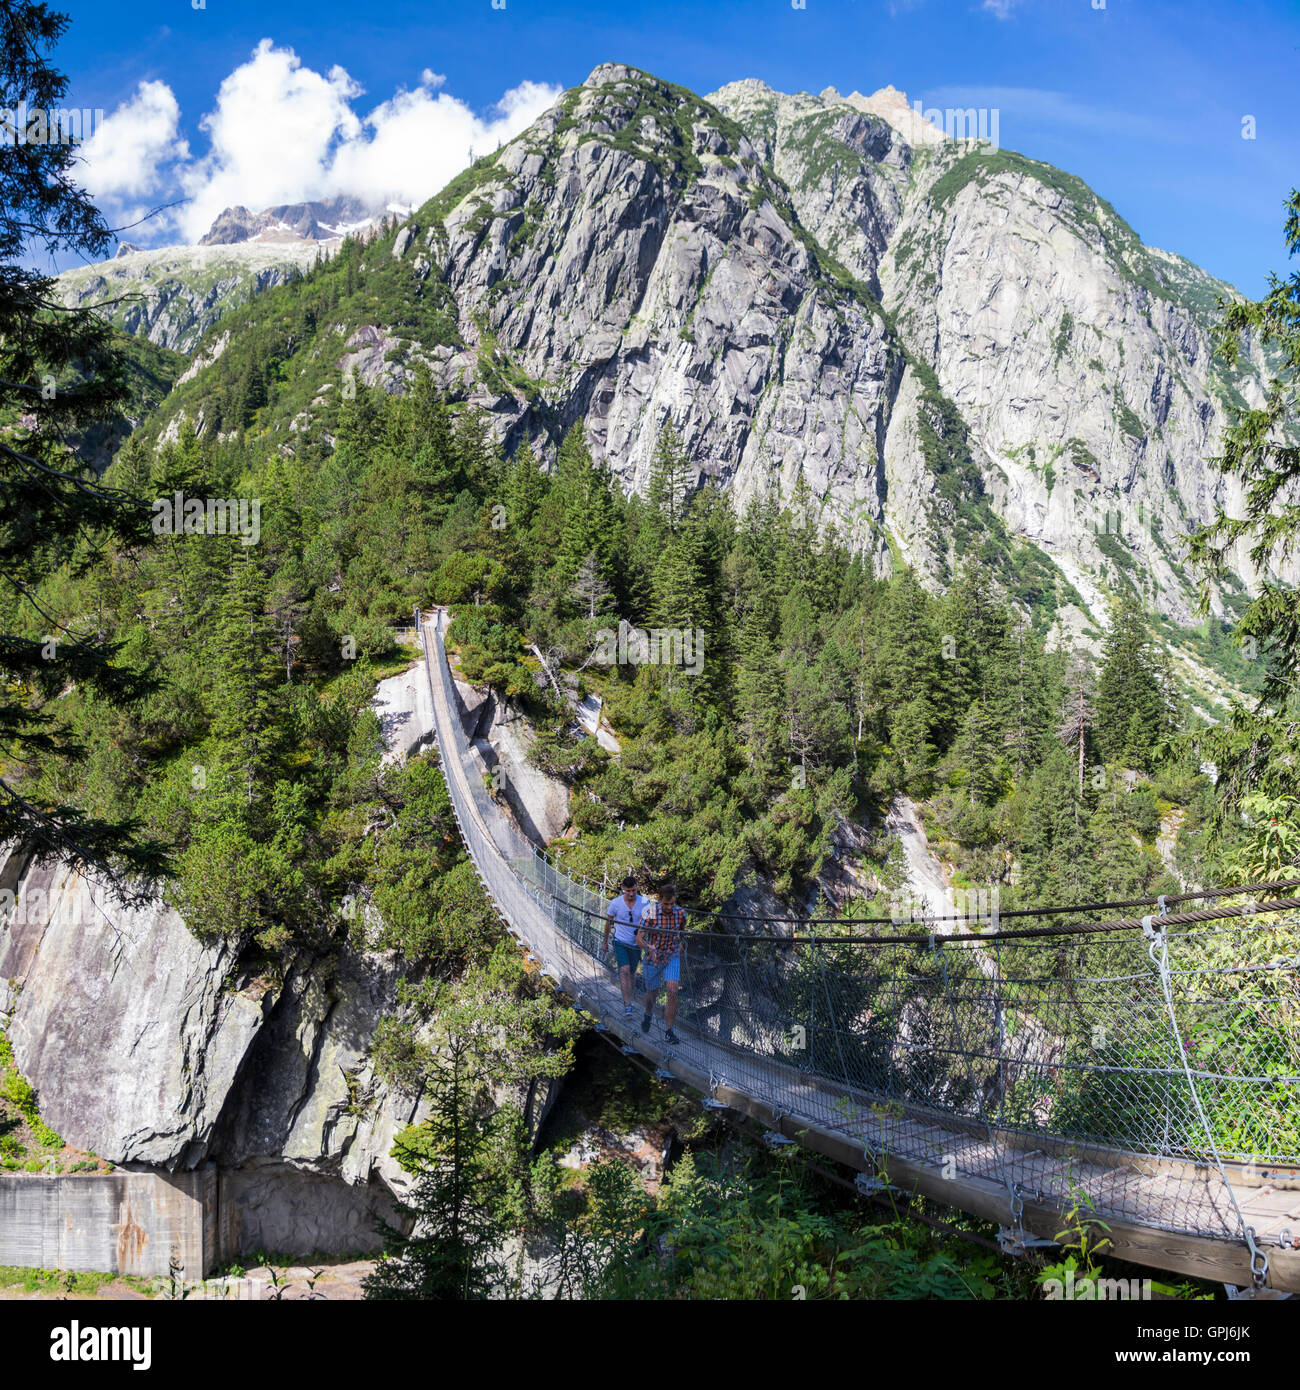 70m long and high pedestrian suspension bridge in the Alps. Handegg, Berner Oberland, Switzerland. Stock Photo